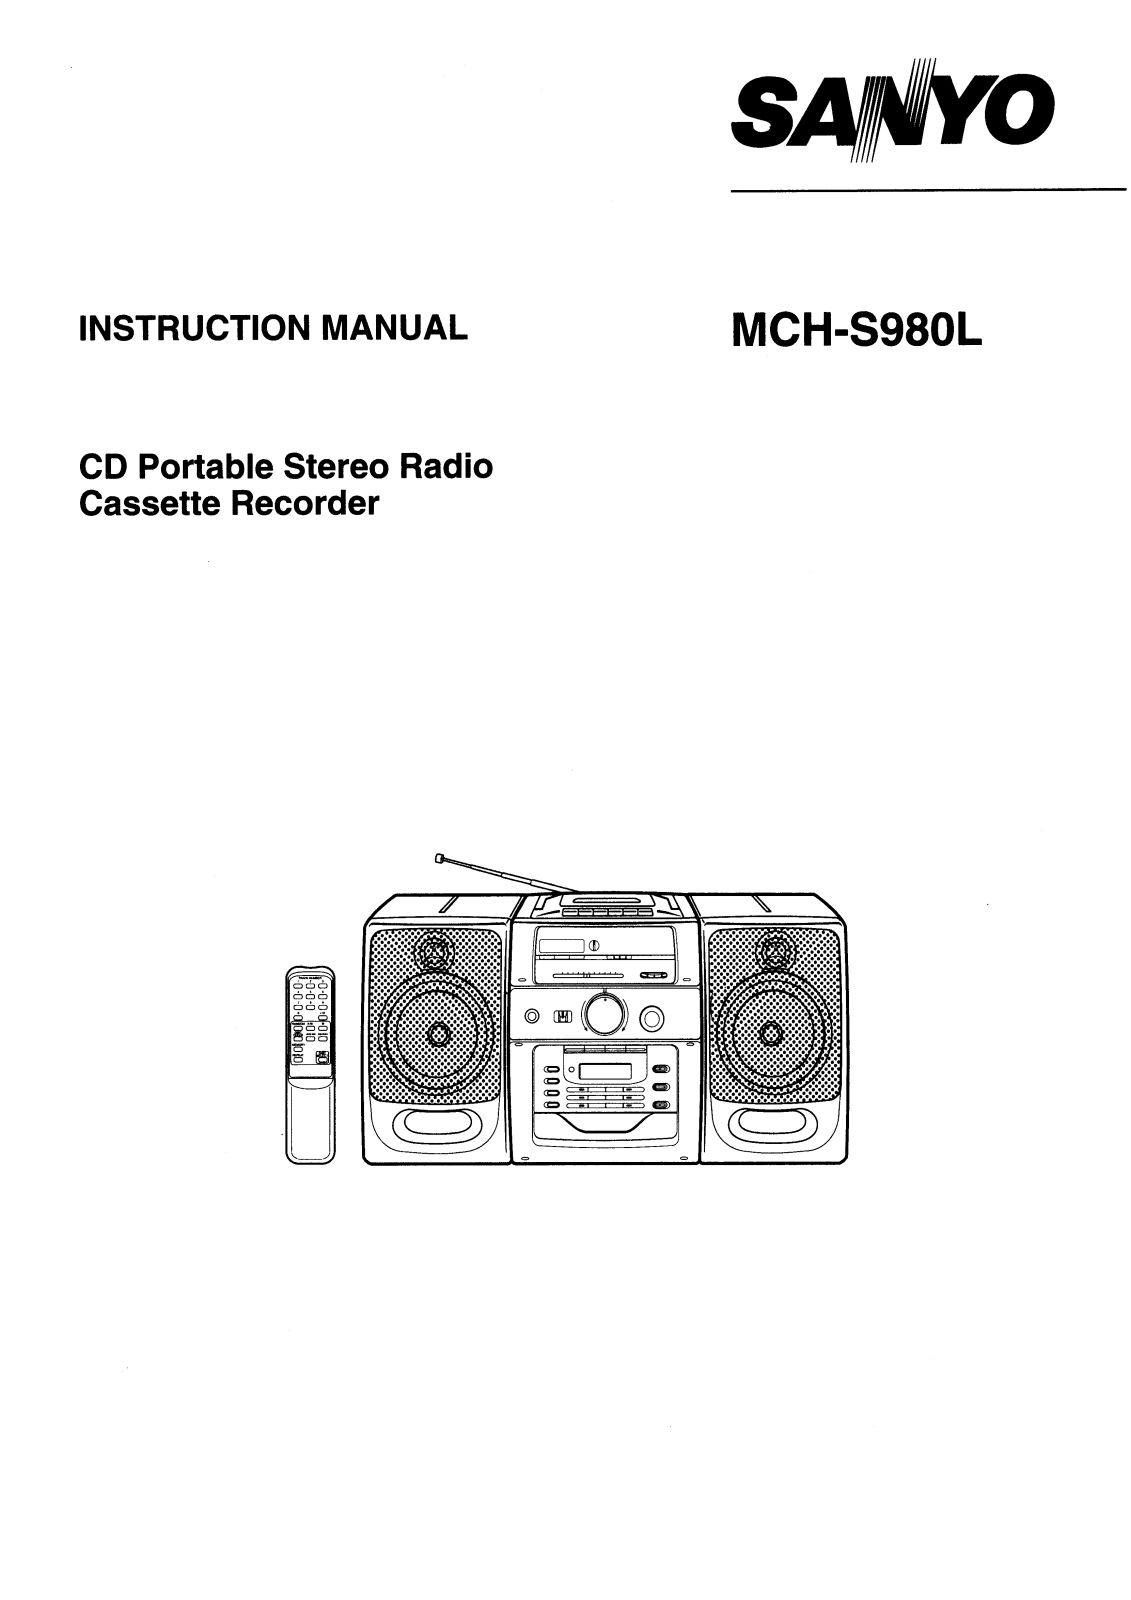 Sanyo MCH-S980L Instruction Manual